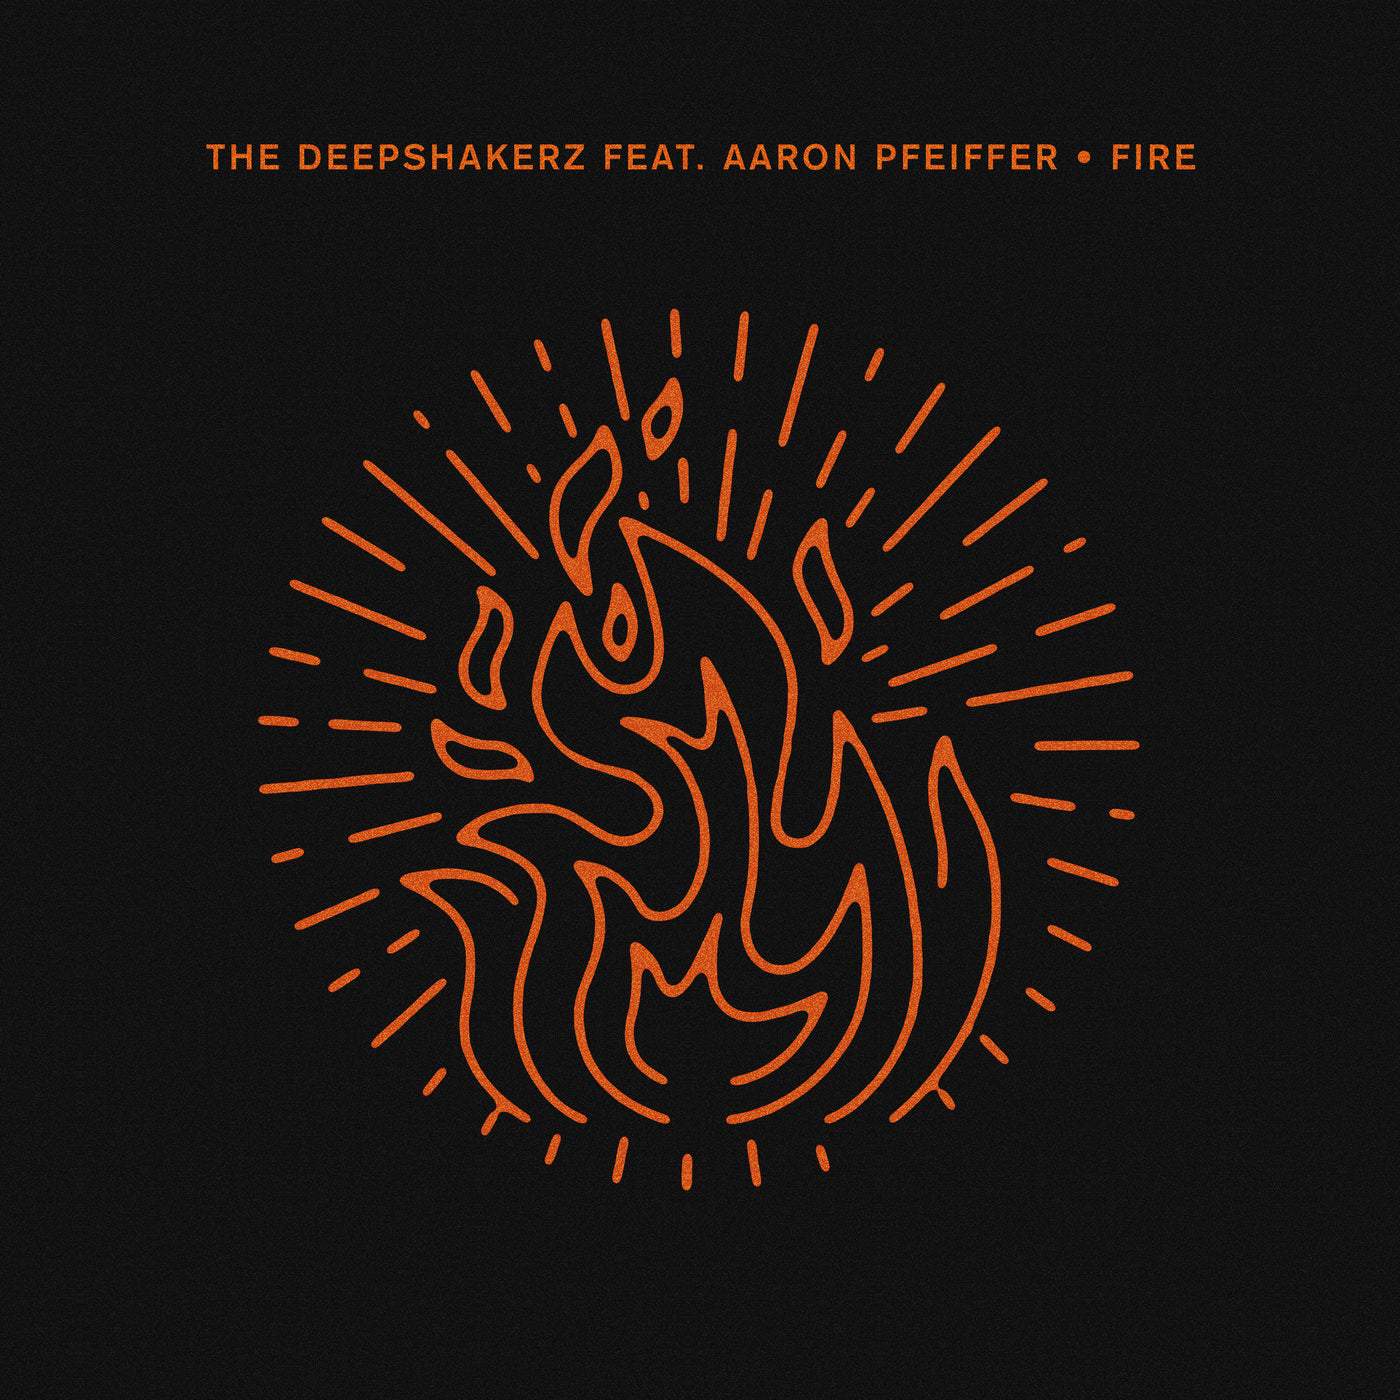 Download The Deepshakerz, Aaron Pfeiffer - Fire on Electrobuzz